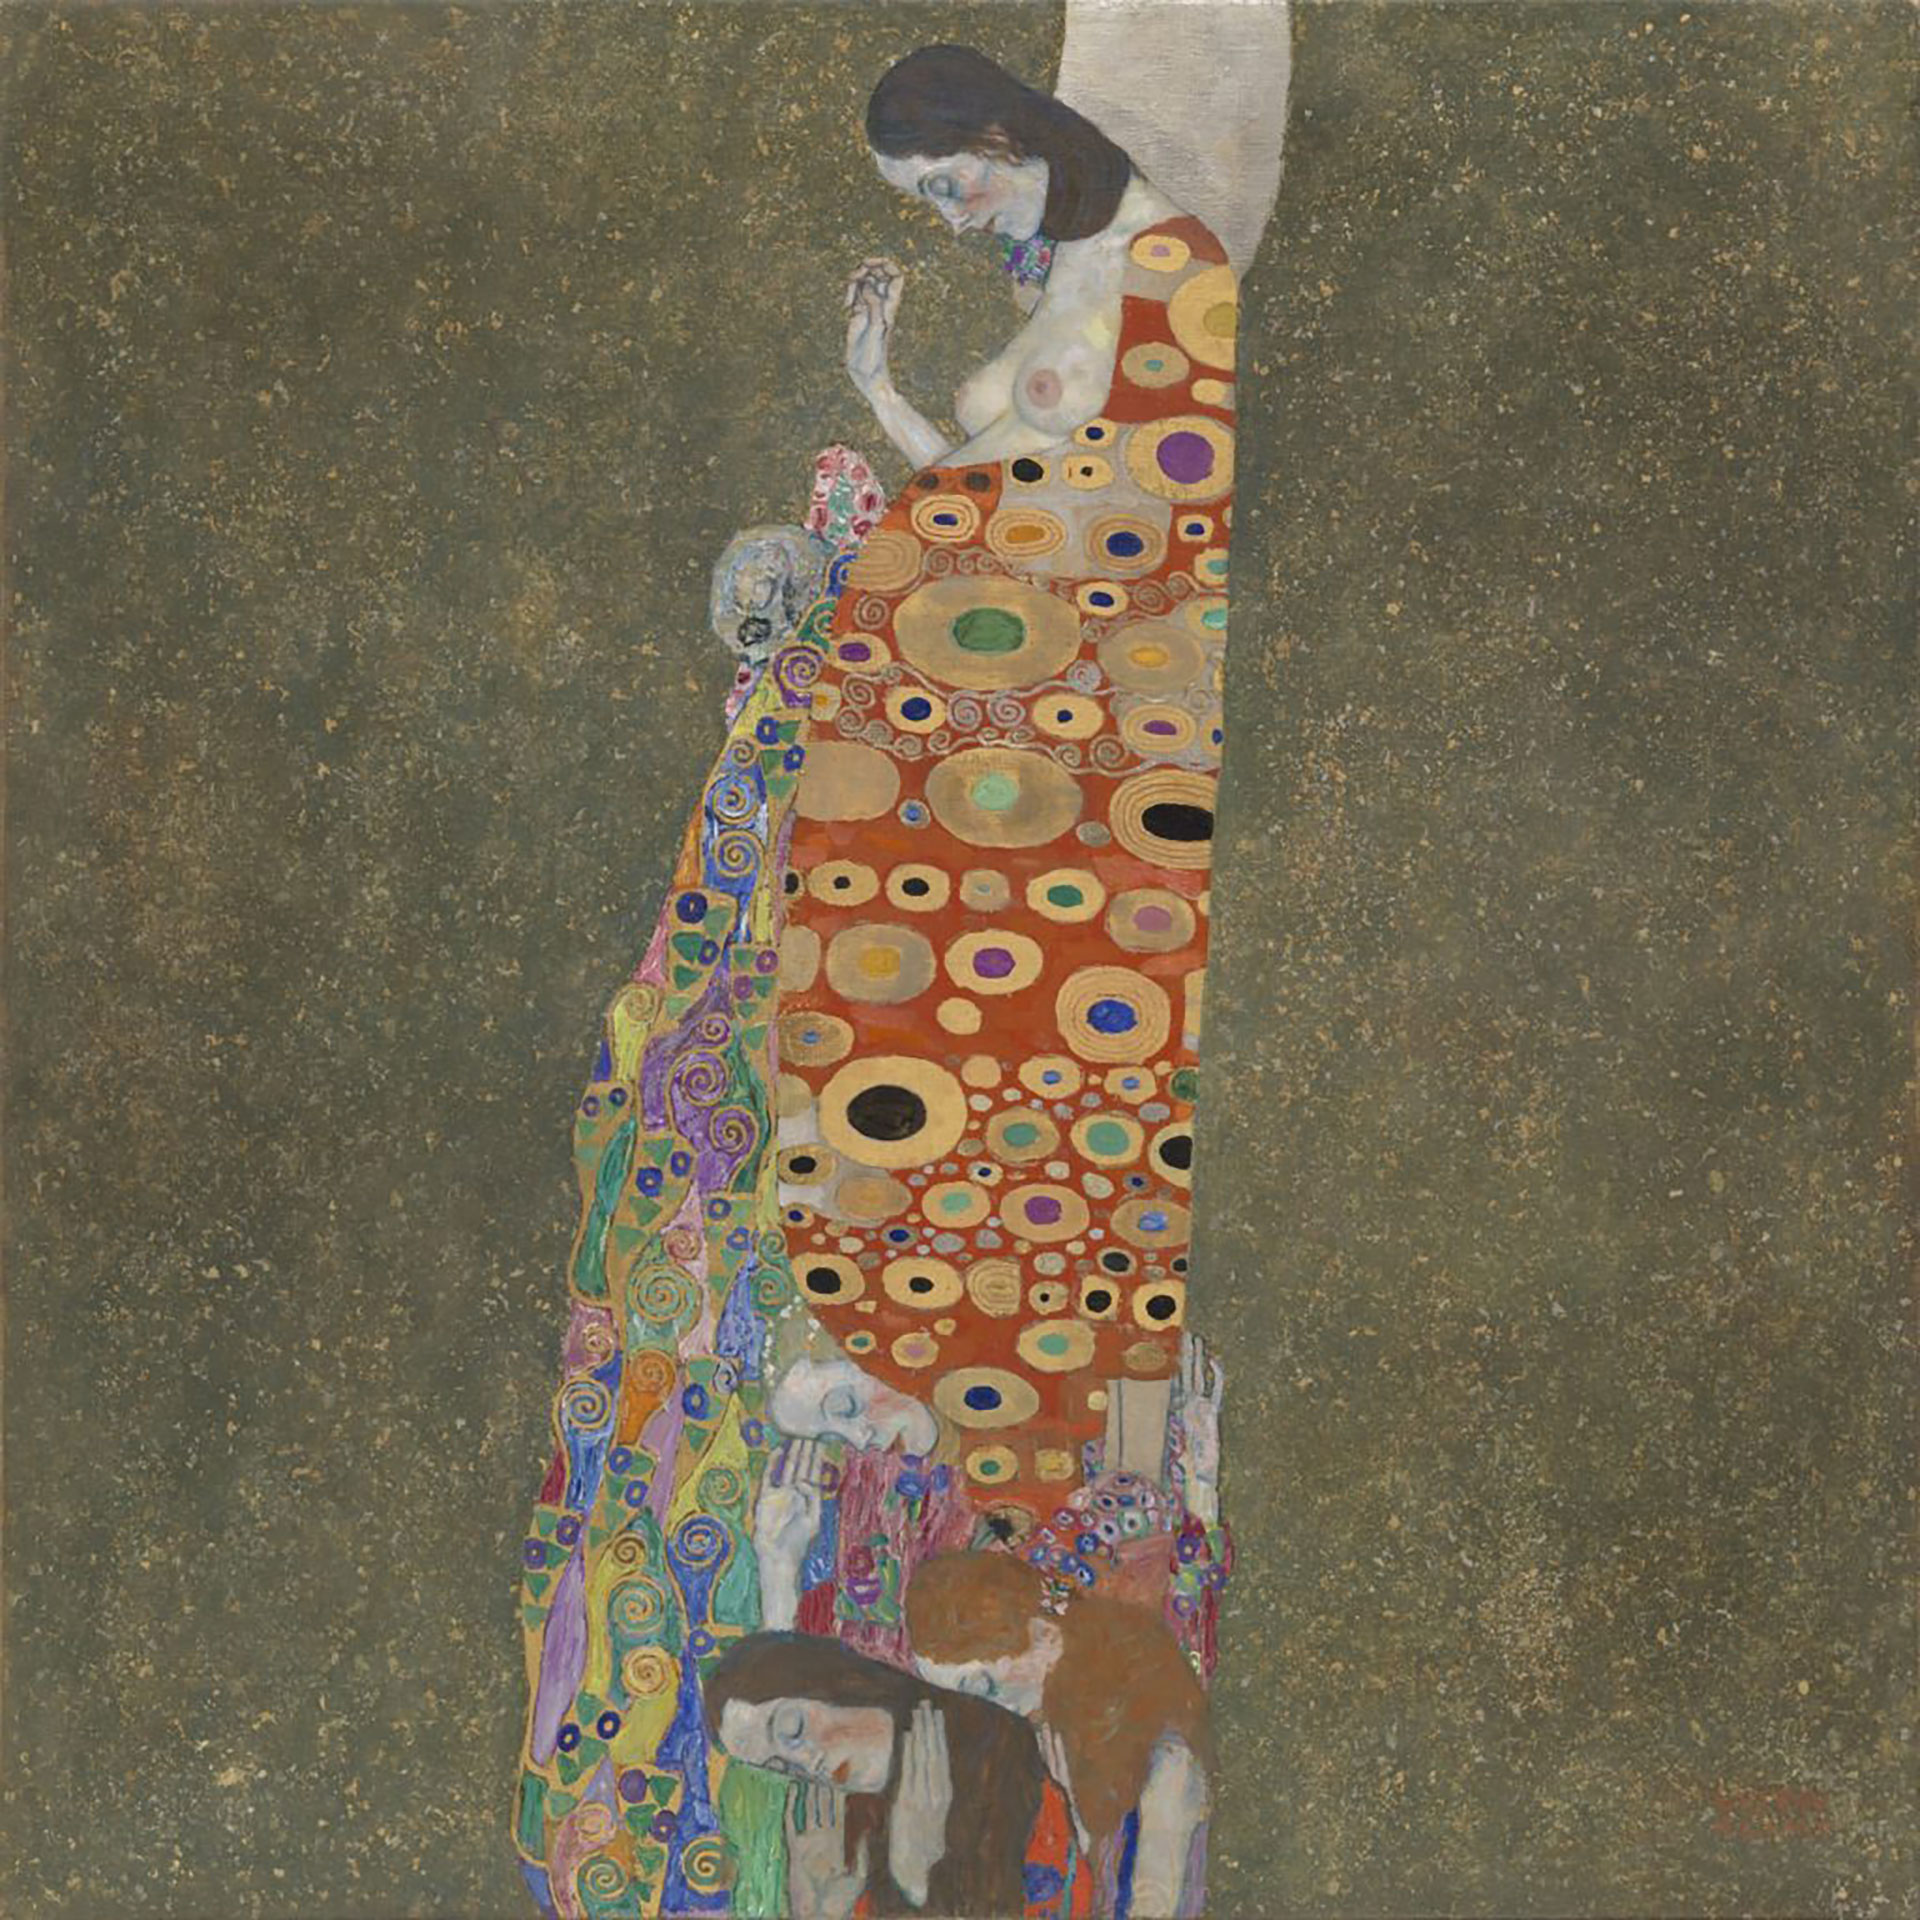 Gustav Klimt, "Hope II" (1907-08). (Cortesía Museum of Modern Art)